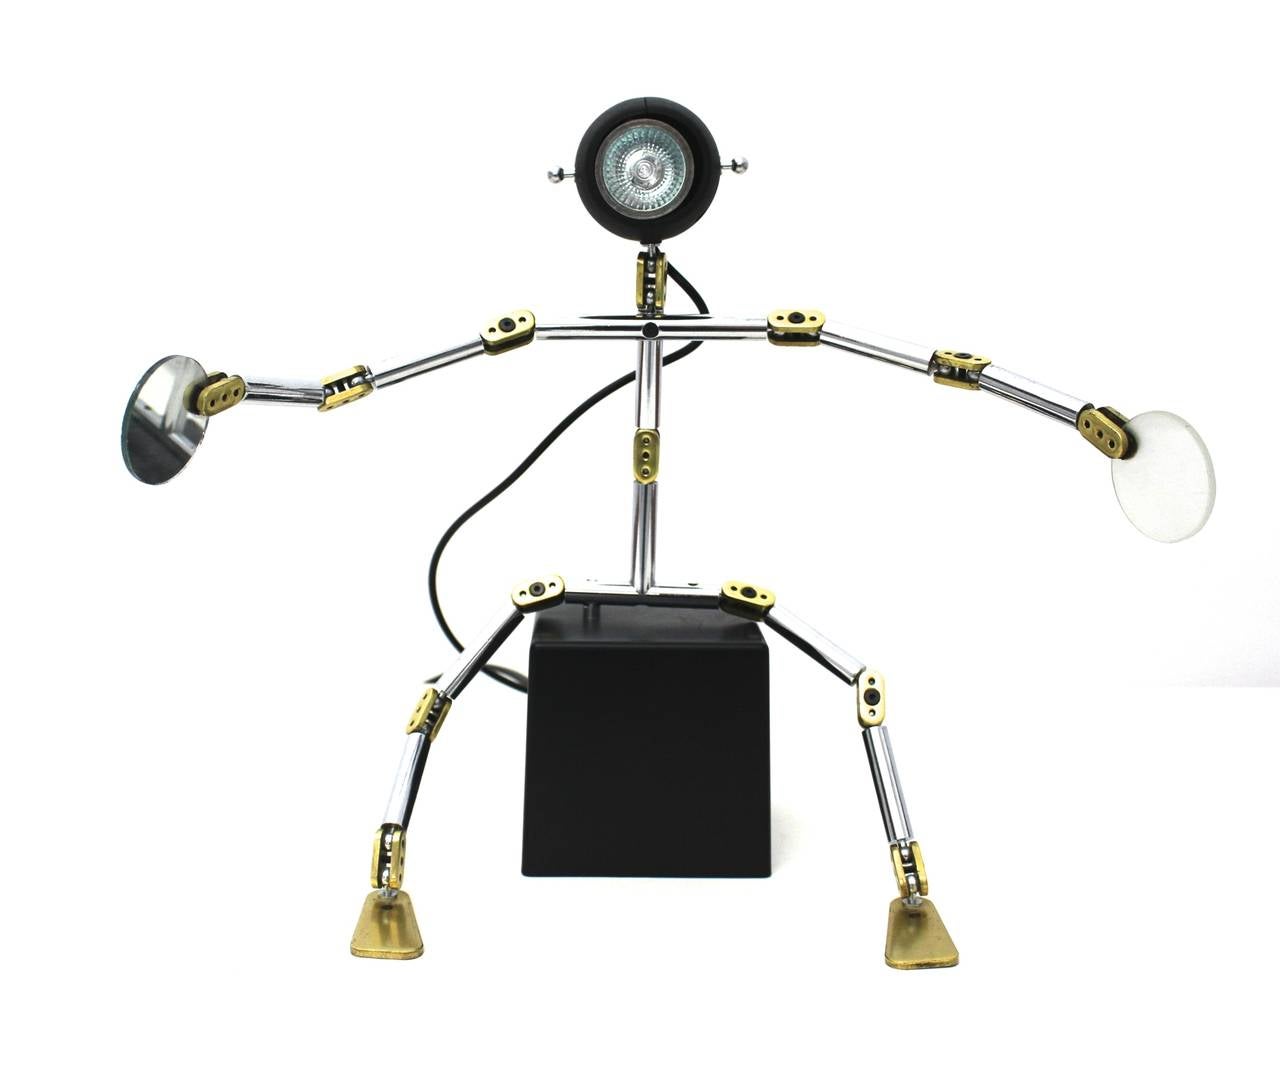 Postmodern metal brass table lamp or light object named 